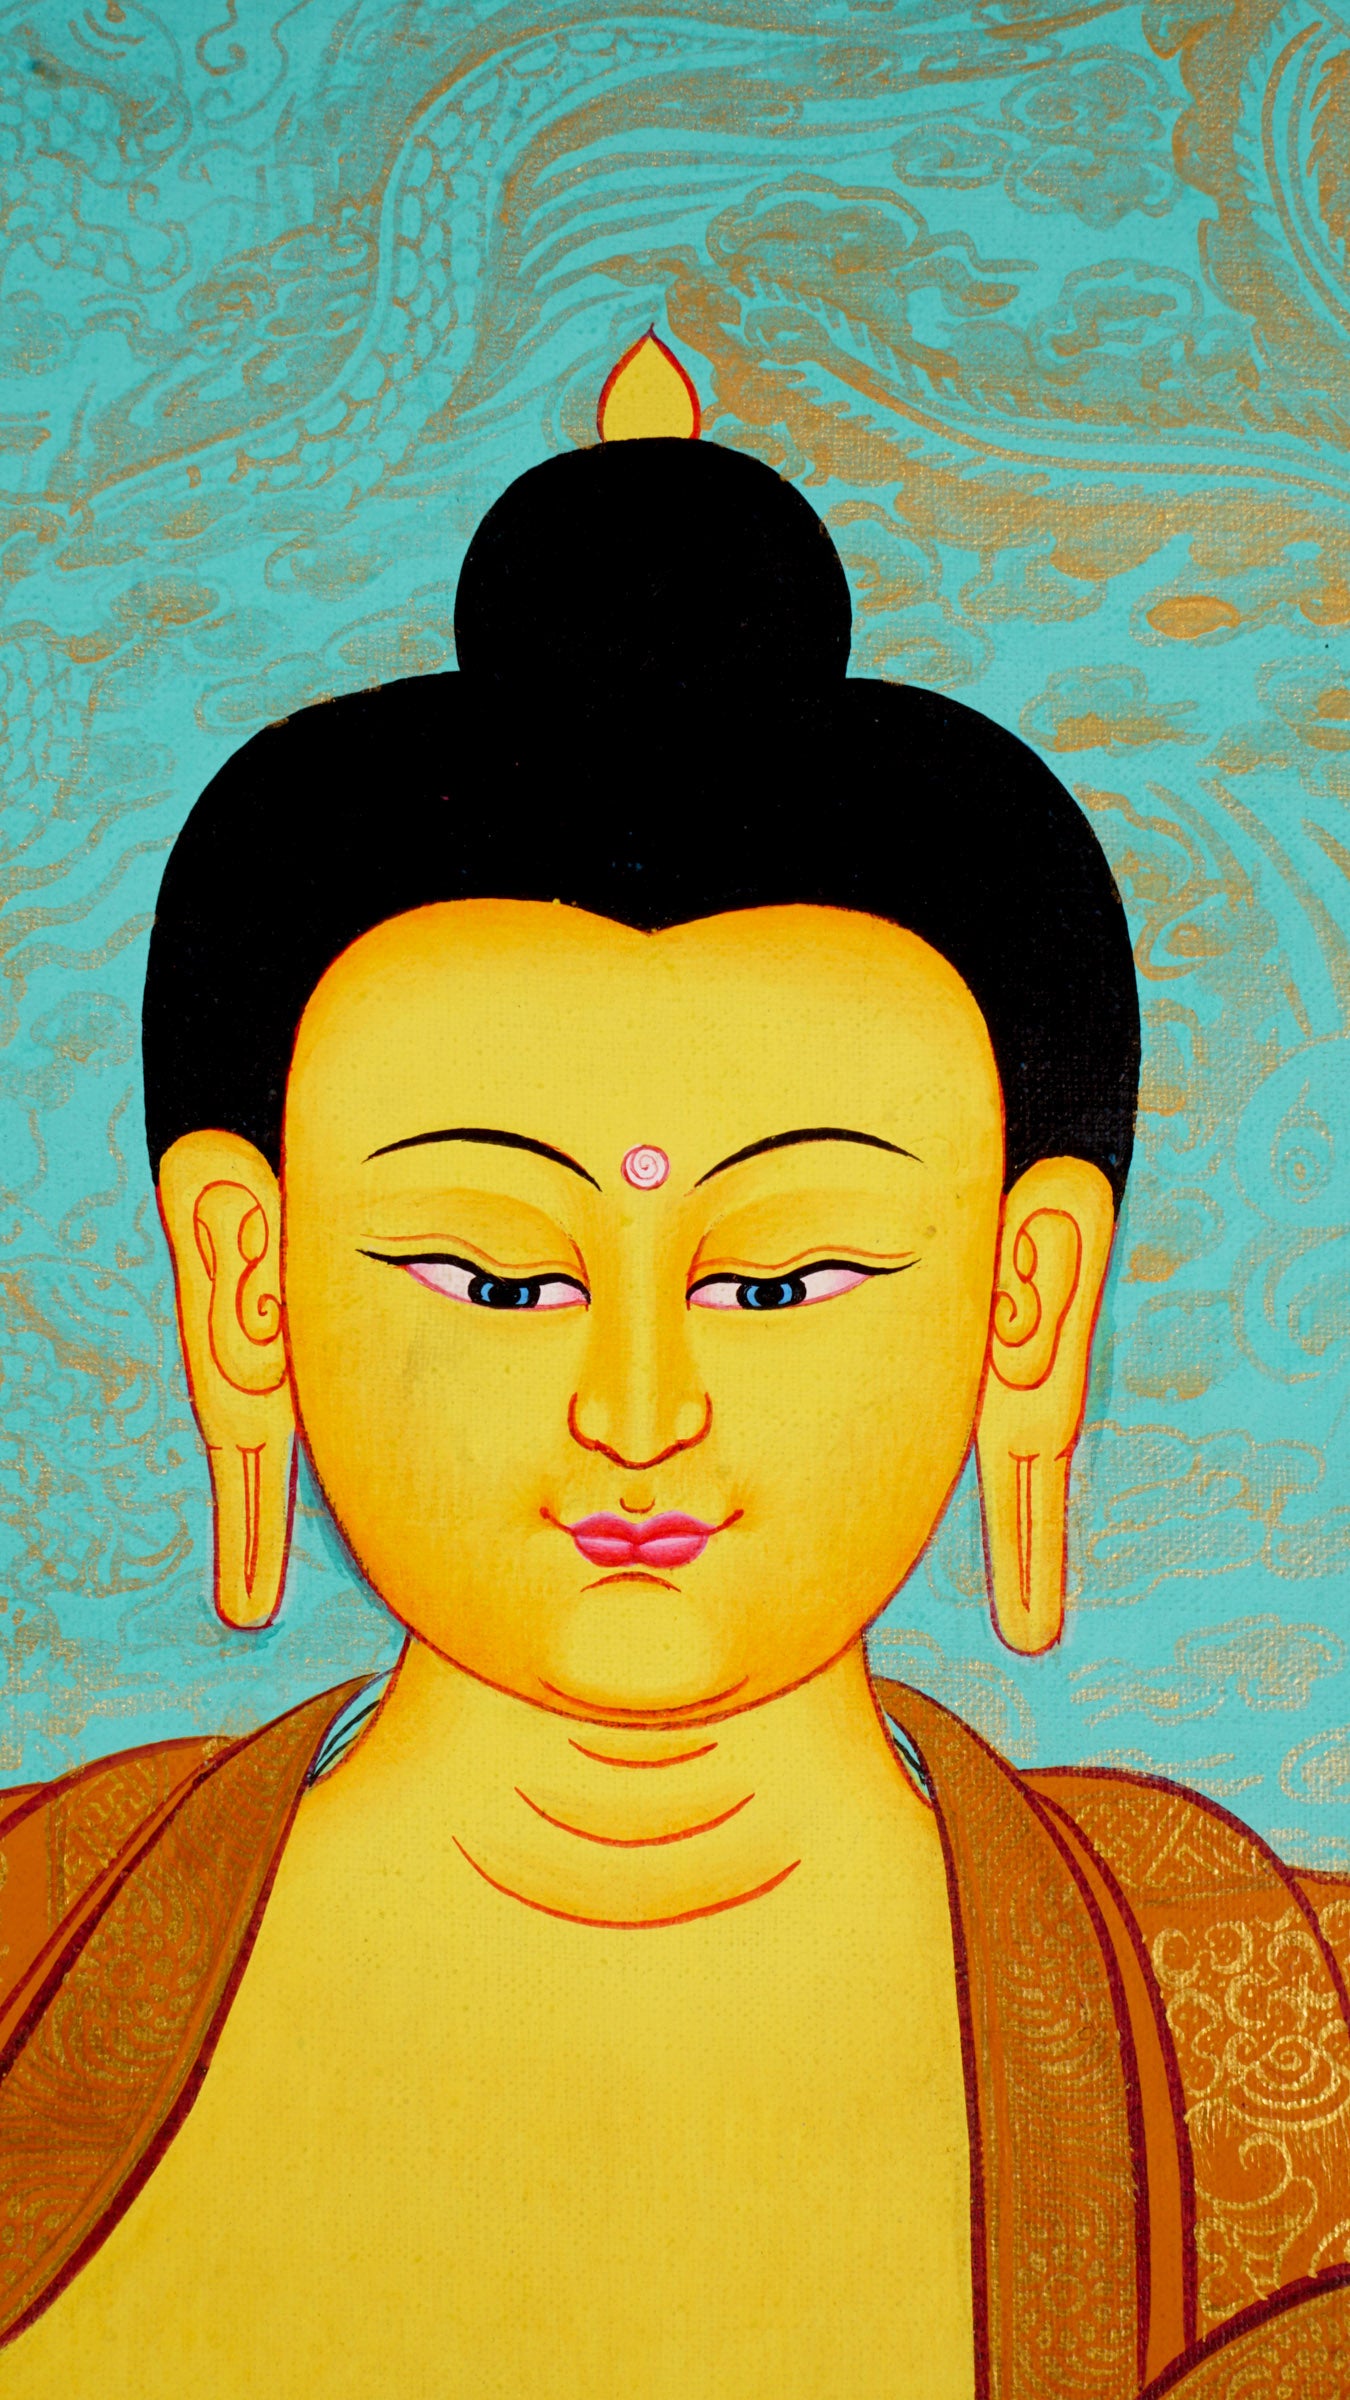 Small Shakyamuni Buddha Thangka - Lucky Thanka